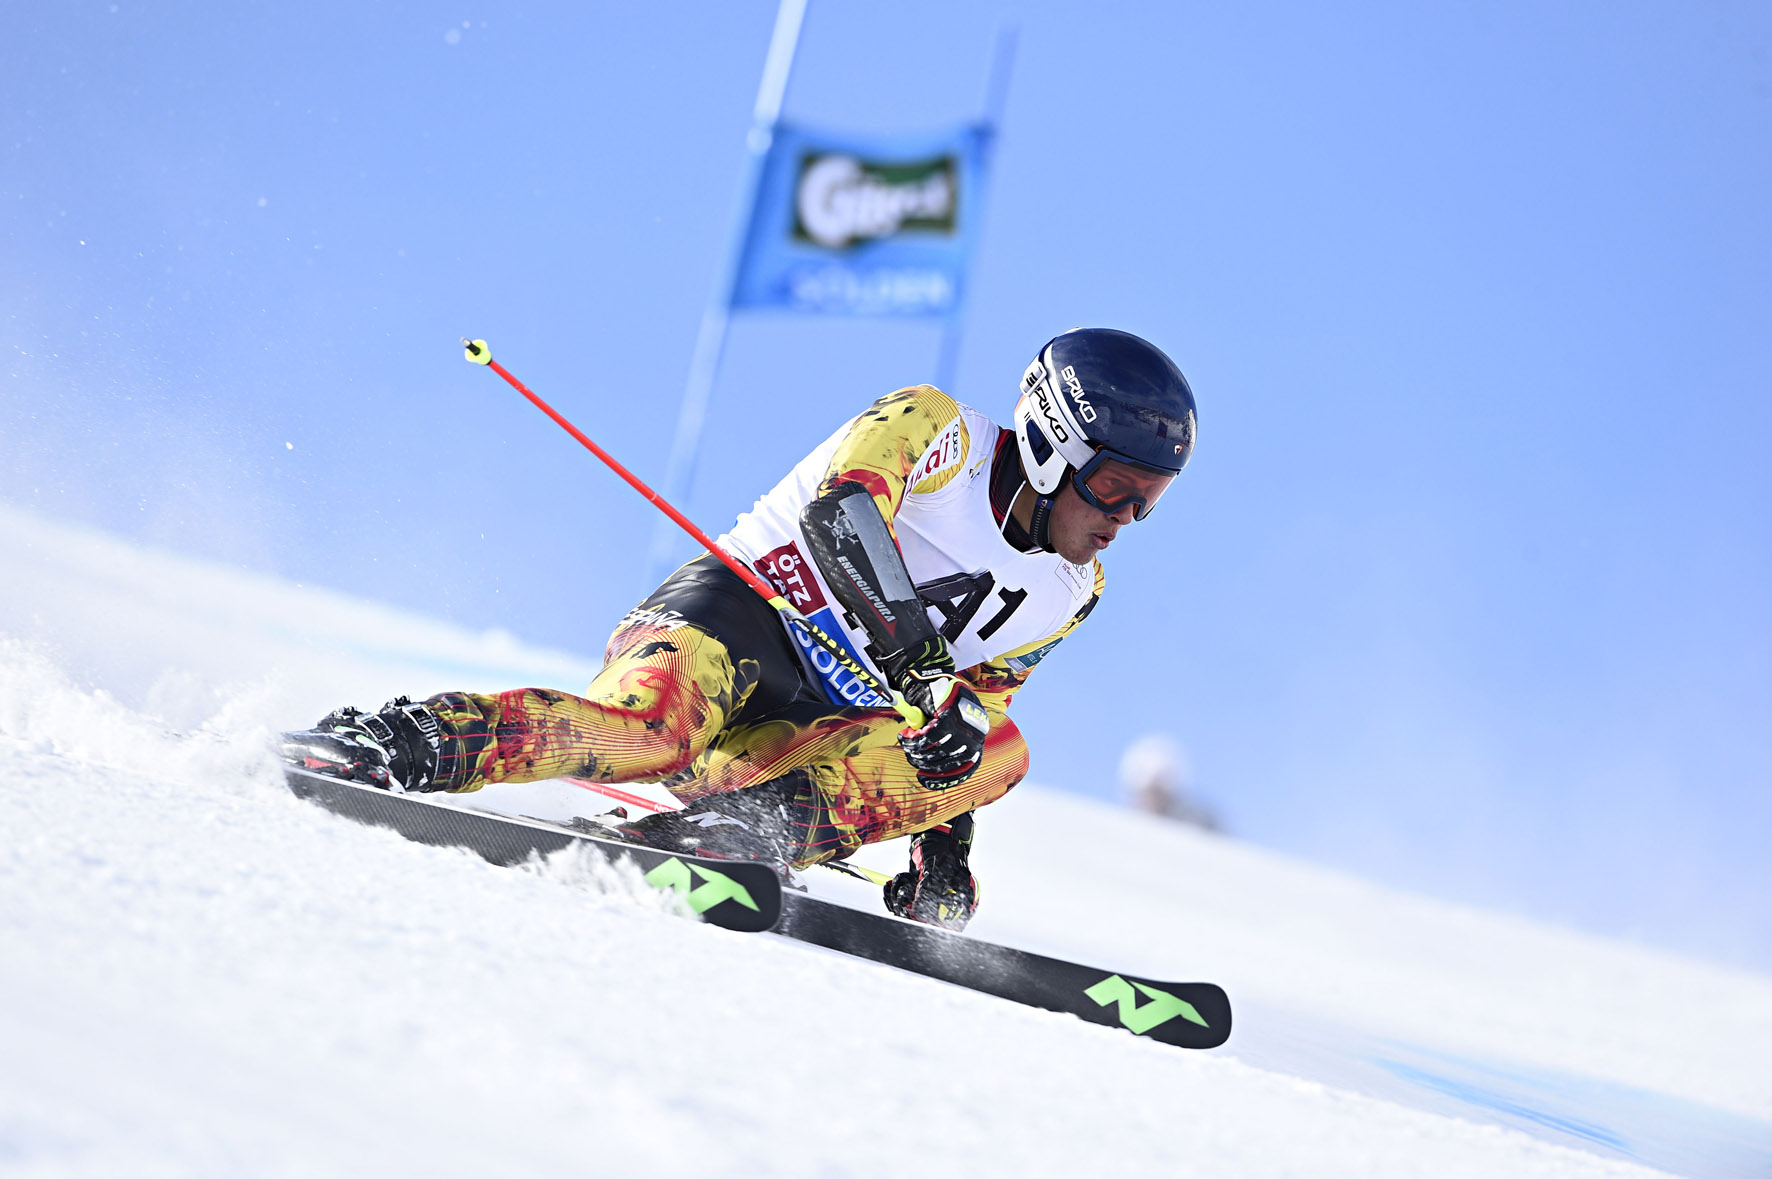 Men's Giant Slalom - SOELDEN 2015 SOELDEN, AUSTRIA - OCTOBER 25: Juan DEL CAMPO from Spain during the AUDI Alpine FIS Ski World Cup Men's Giant Slalom >>CREDIT: Alain GROSCLAUDE/AGENCE ZOOM